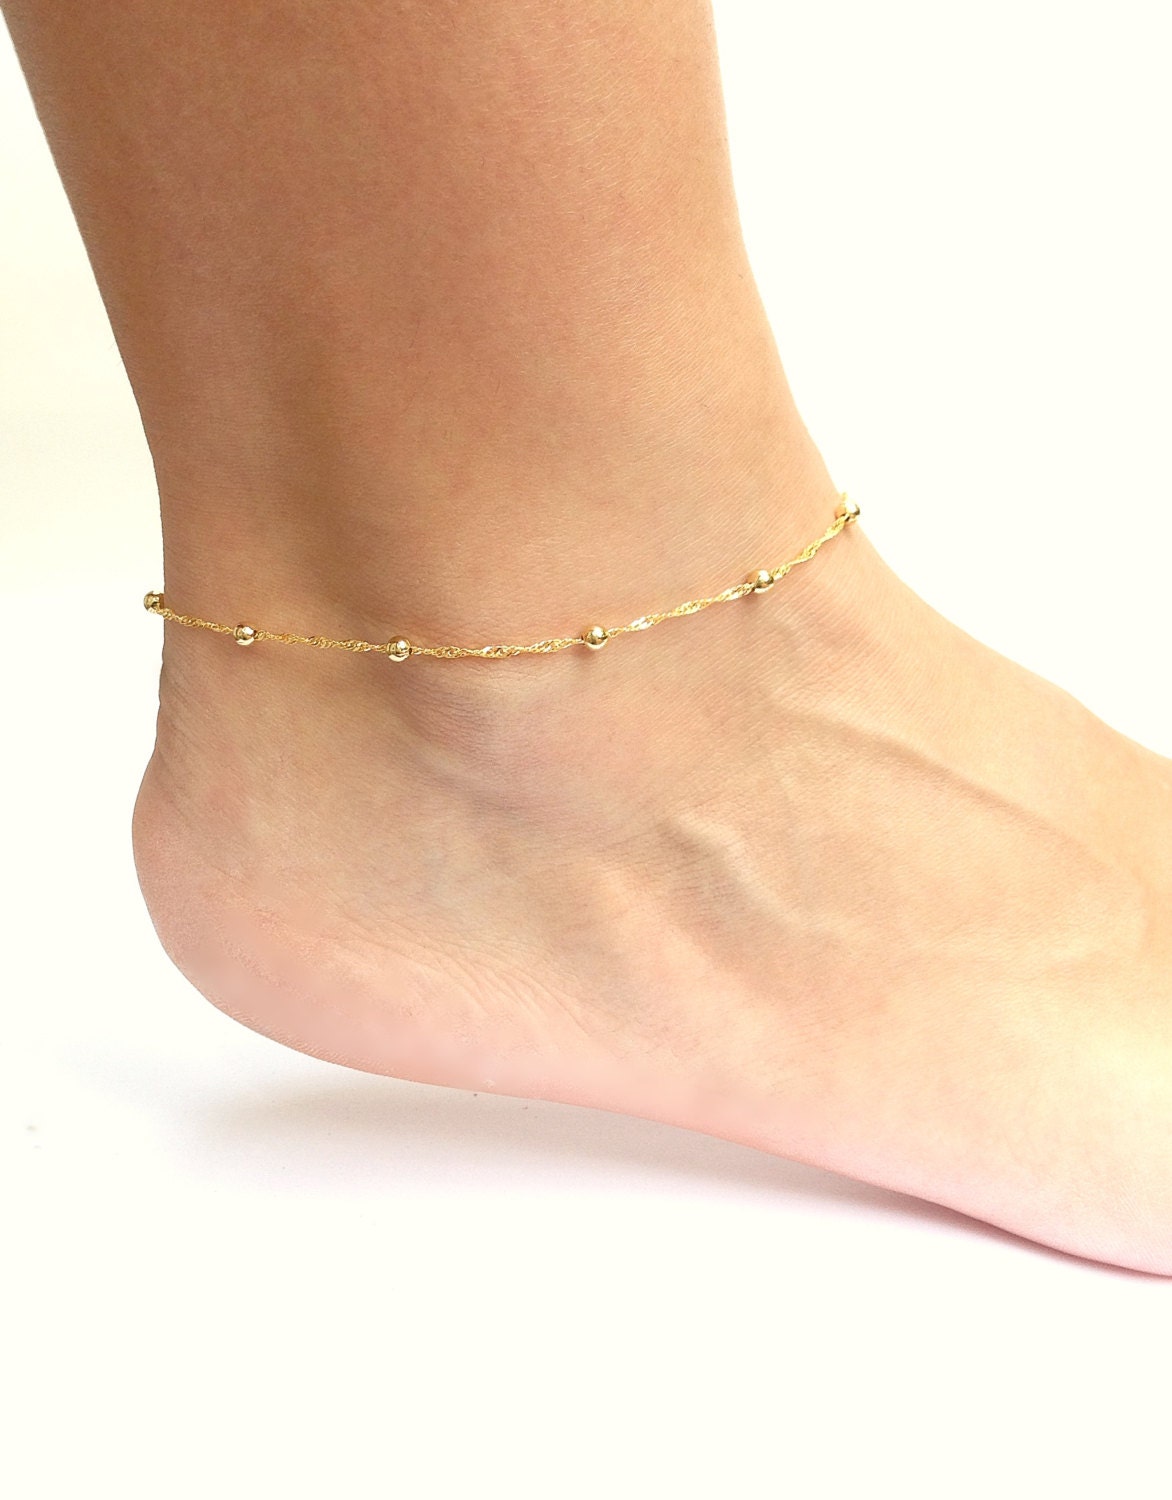 Gold Ankle Bracelet Anklets For Women Gold Chain Anklet Etsy